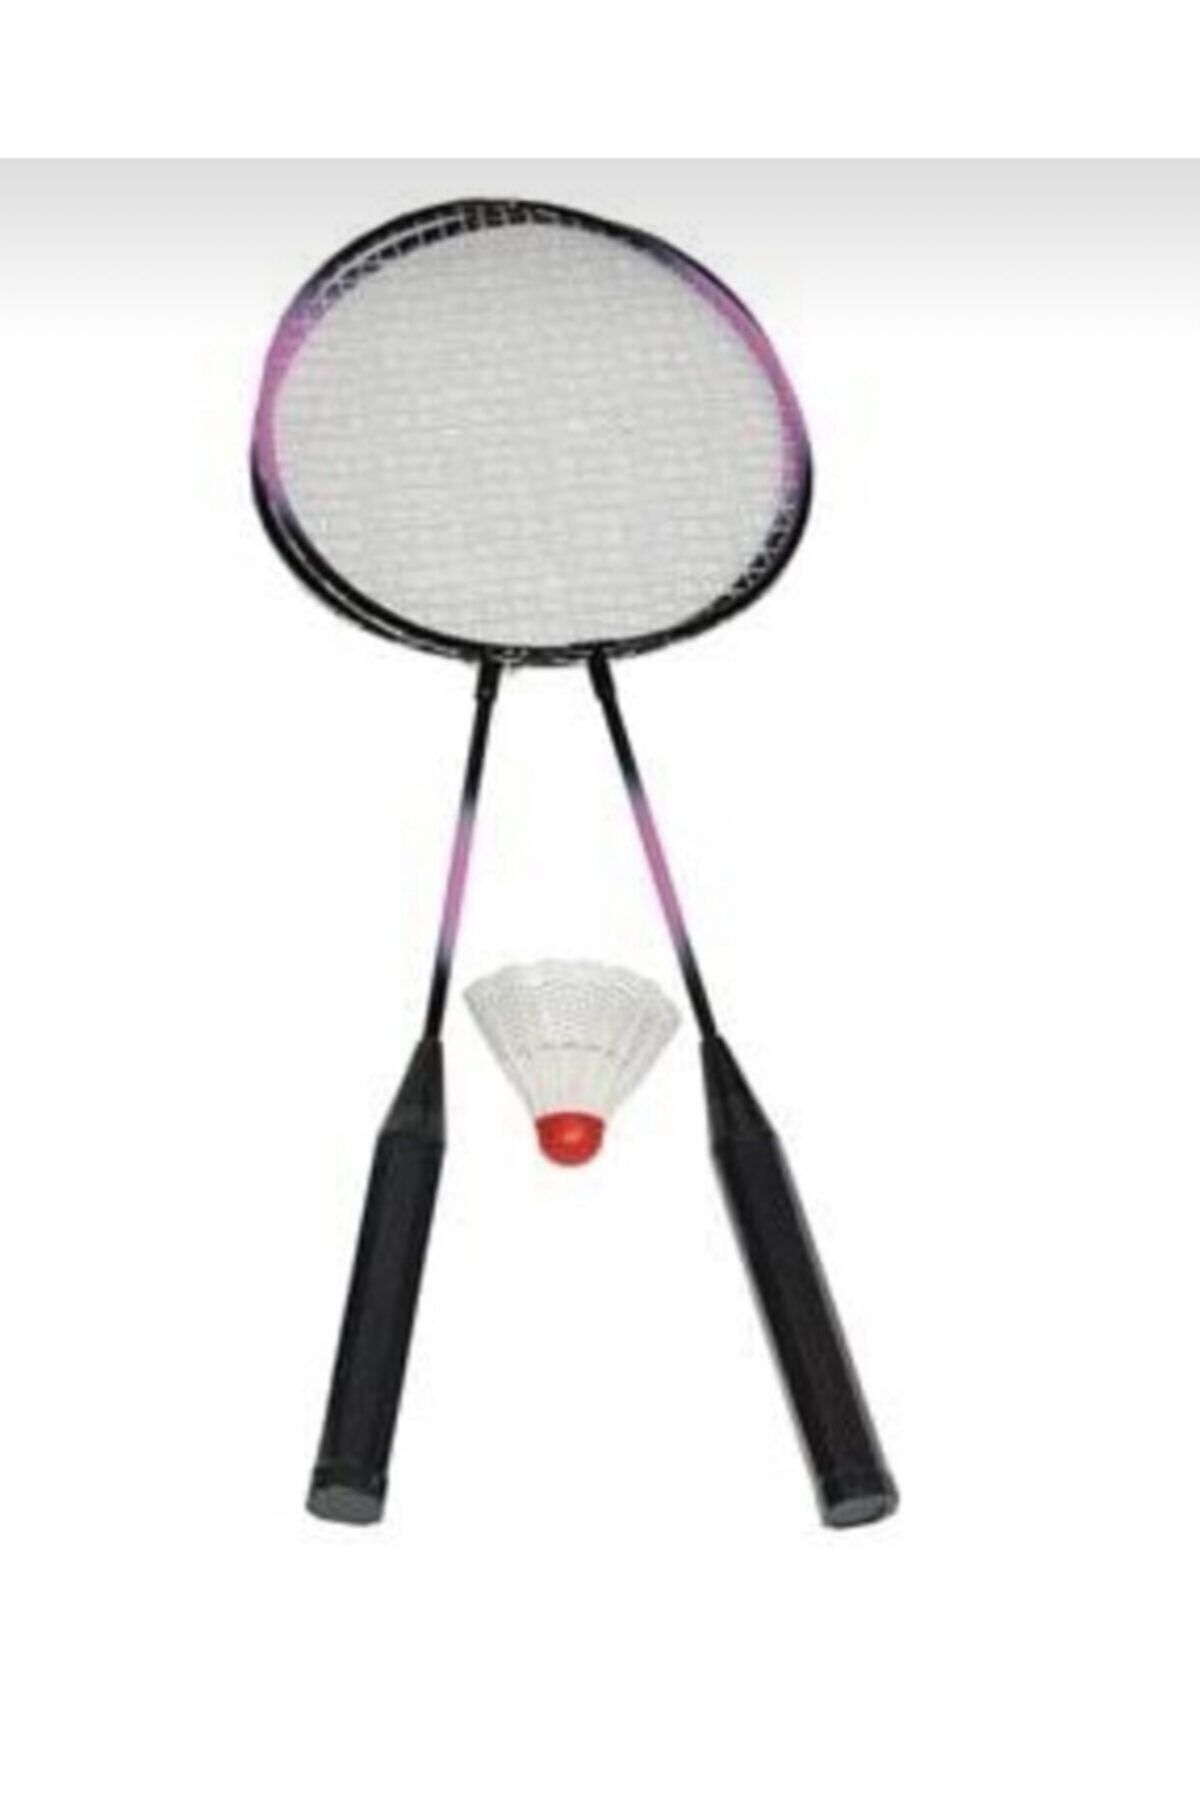 casper sport Badminton Raket